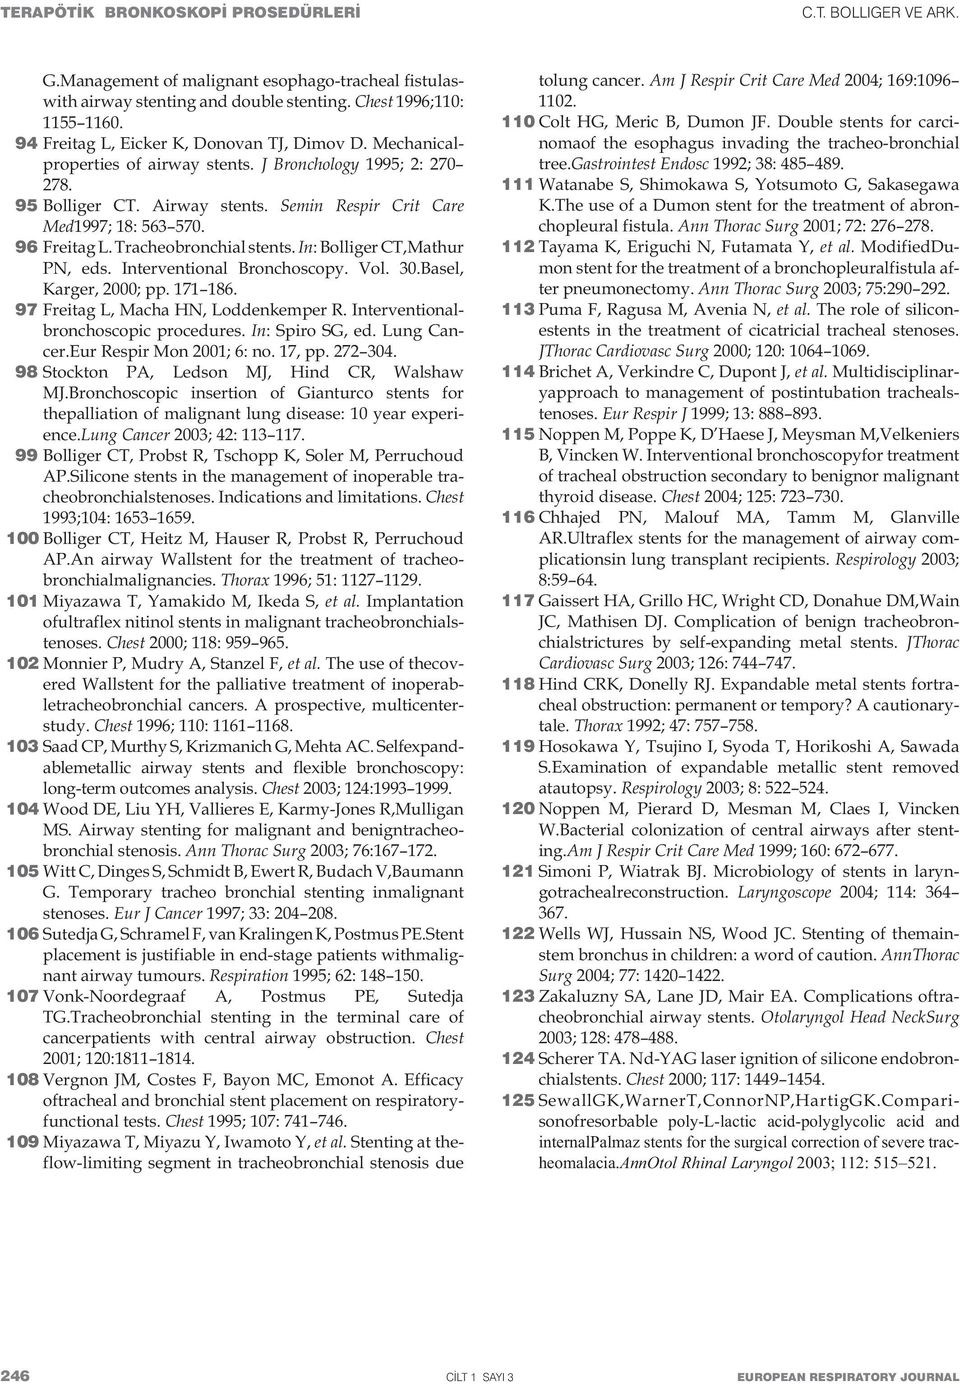 96 Freitag L. Tracheobronchial stents. In: Bolliger CT,Mathur PN, eds. Interventional Bronchoscopy. Vol. 30.Basel, Karger, 2000; pp. 171 186. 97 Freitag L, Macha HN, Loddenkemper R.